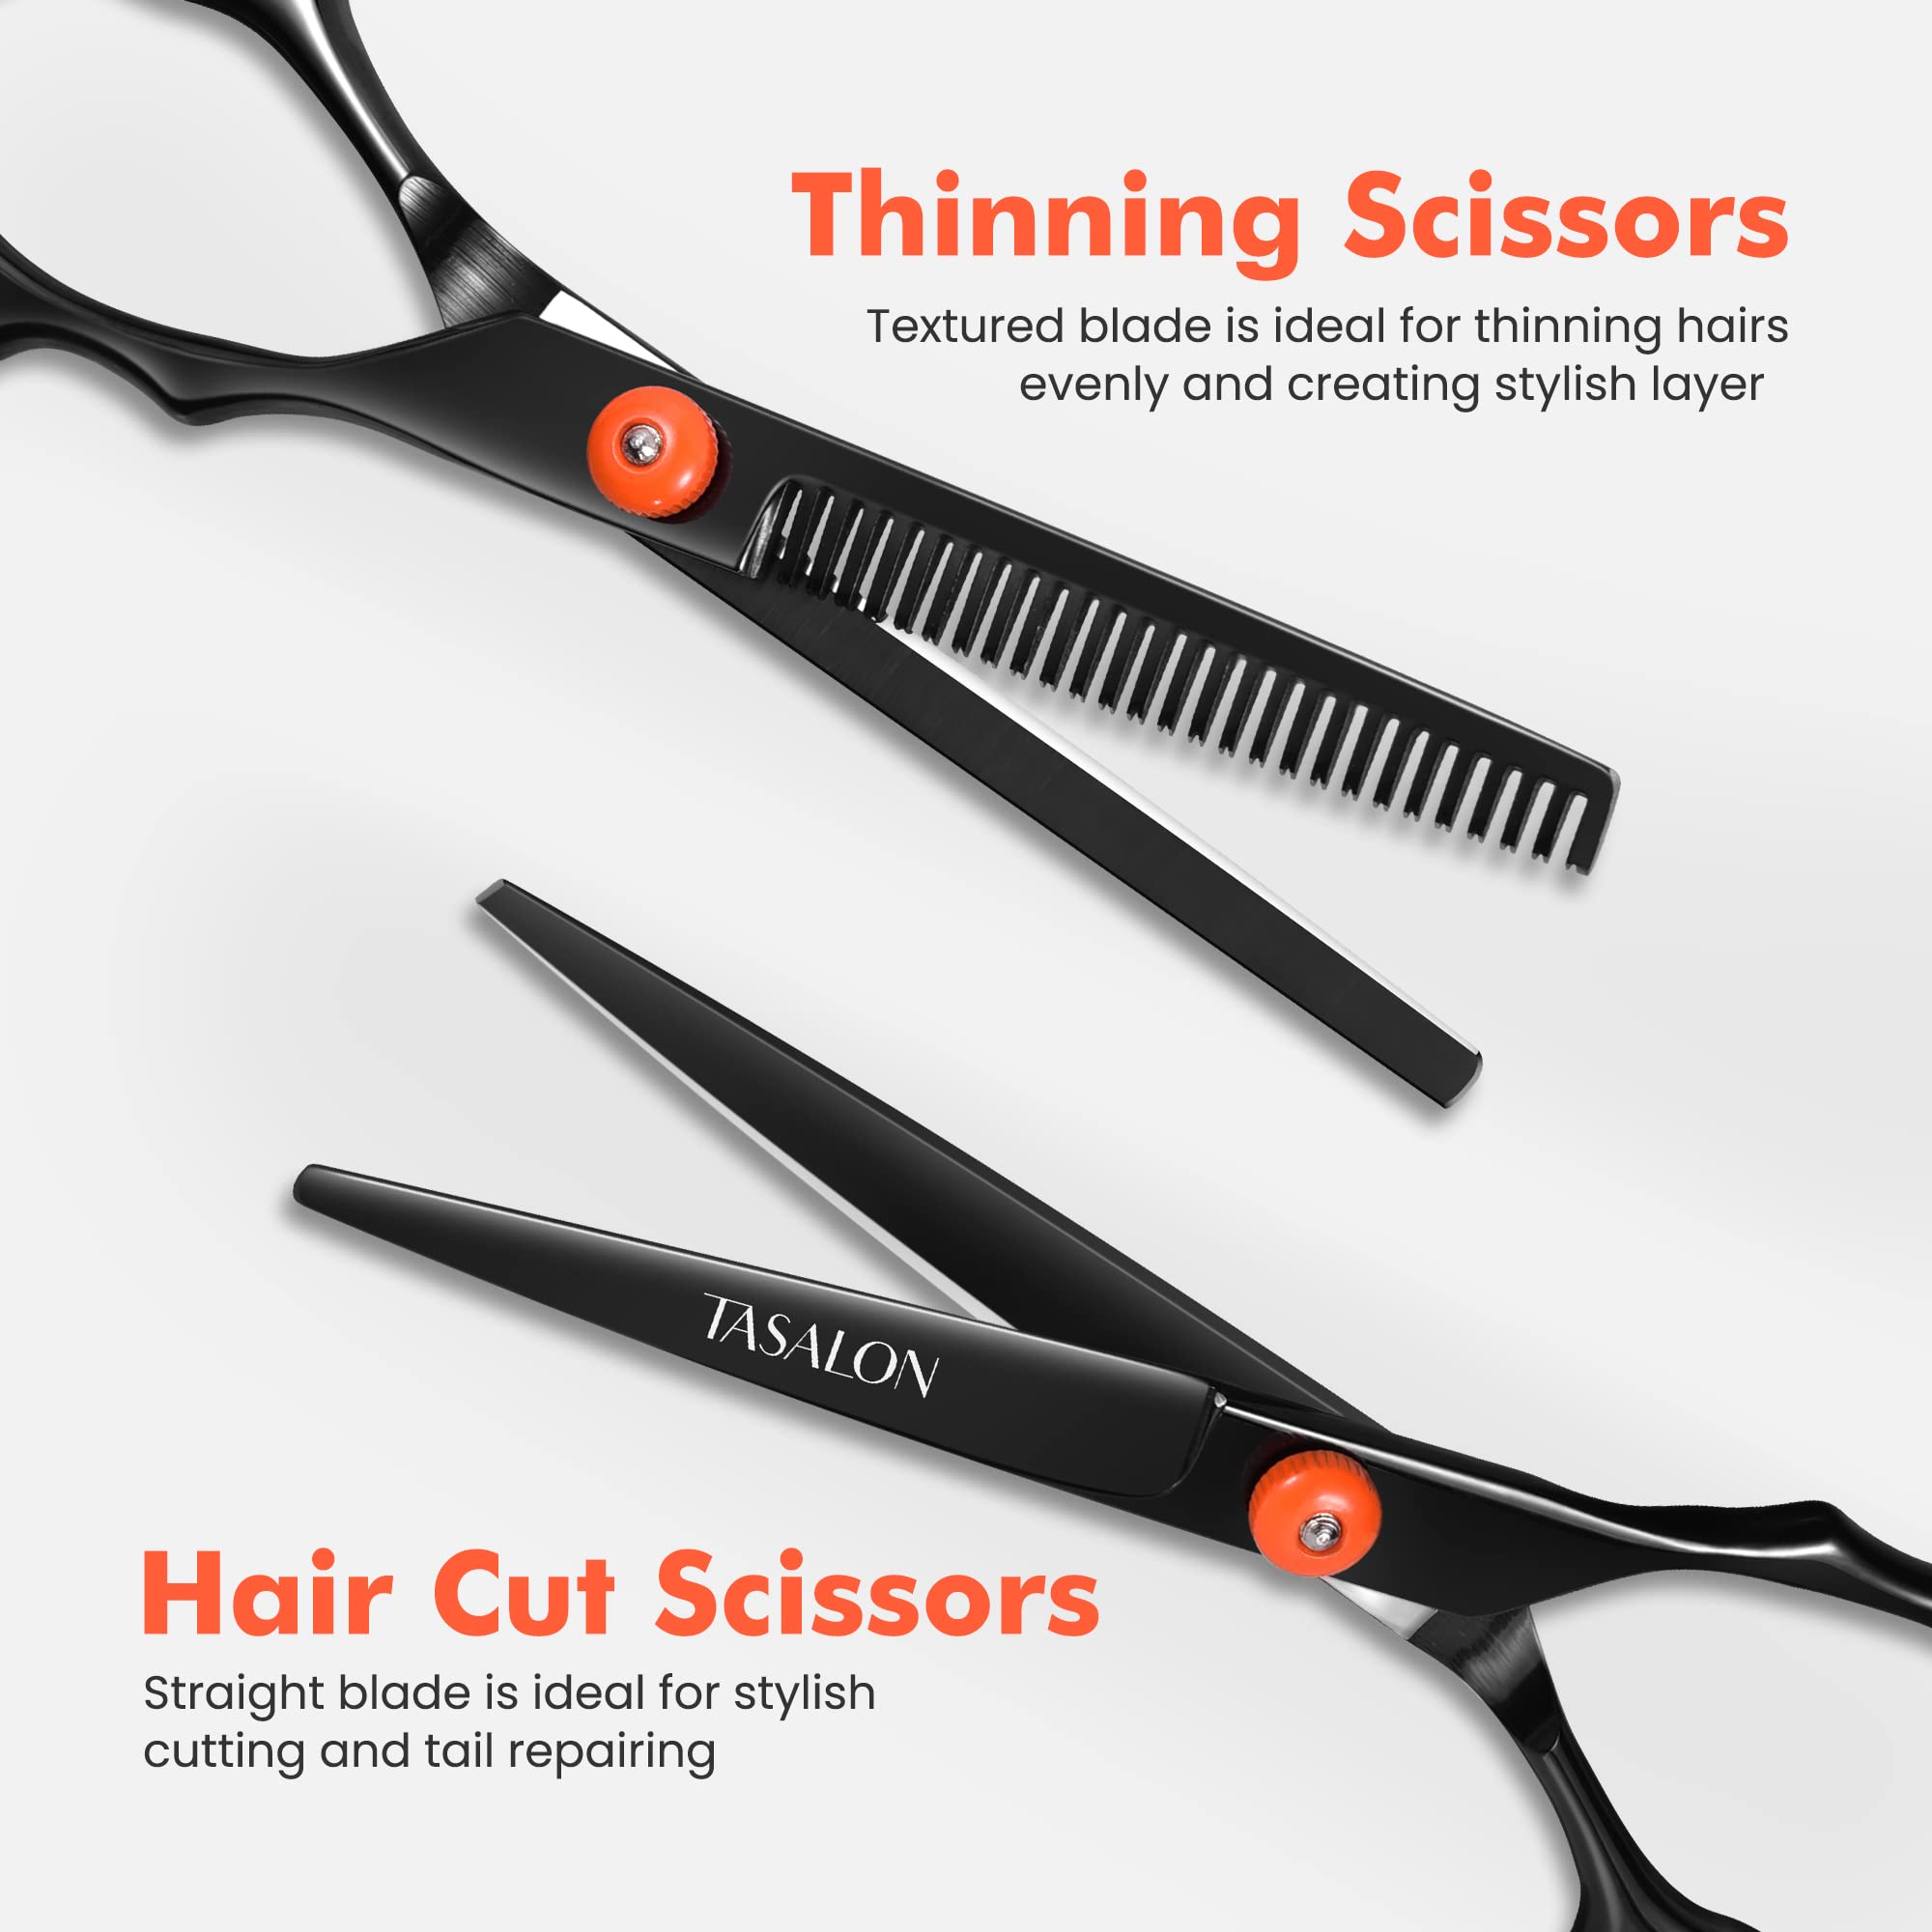 TASALON Hair Cutting Scissors Kit- All-in-1 Set of Hair Cutting Scissors - Professional Hair Shears, Thinning Scissor, Hair Comb, Neck Duster in Leather Bag -Haircut Scissor Kit